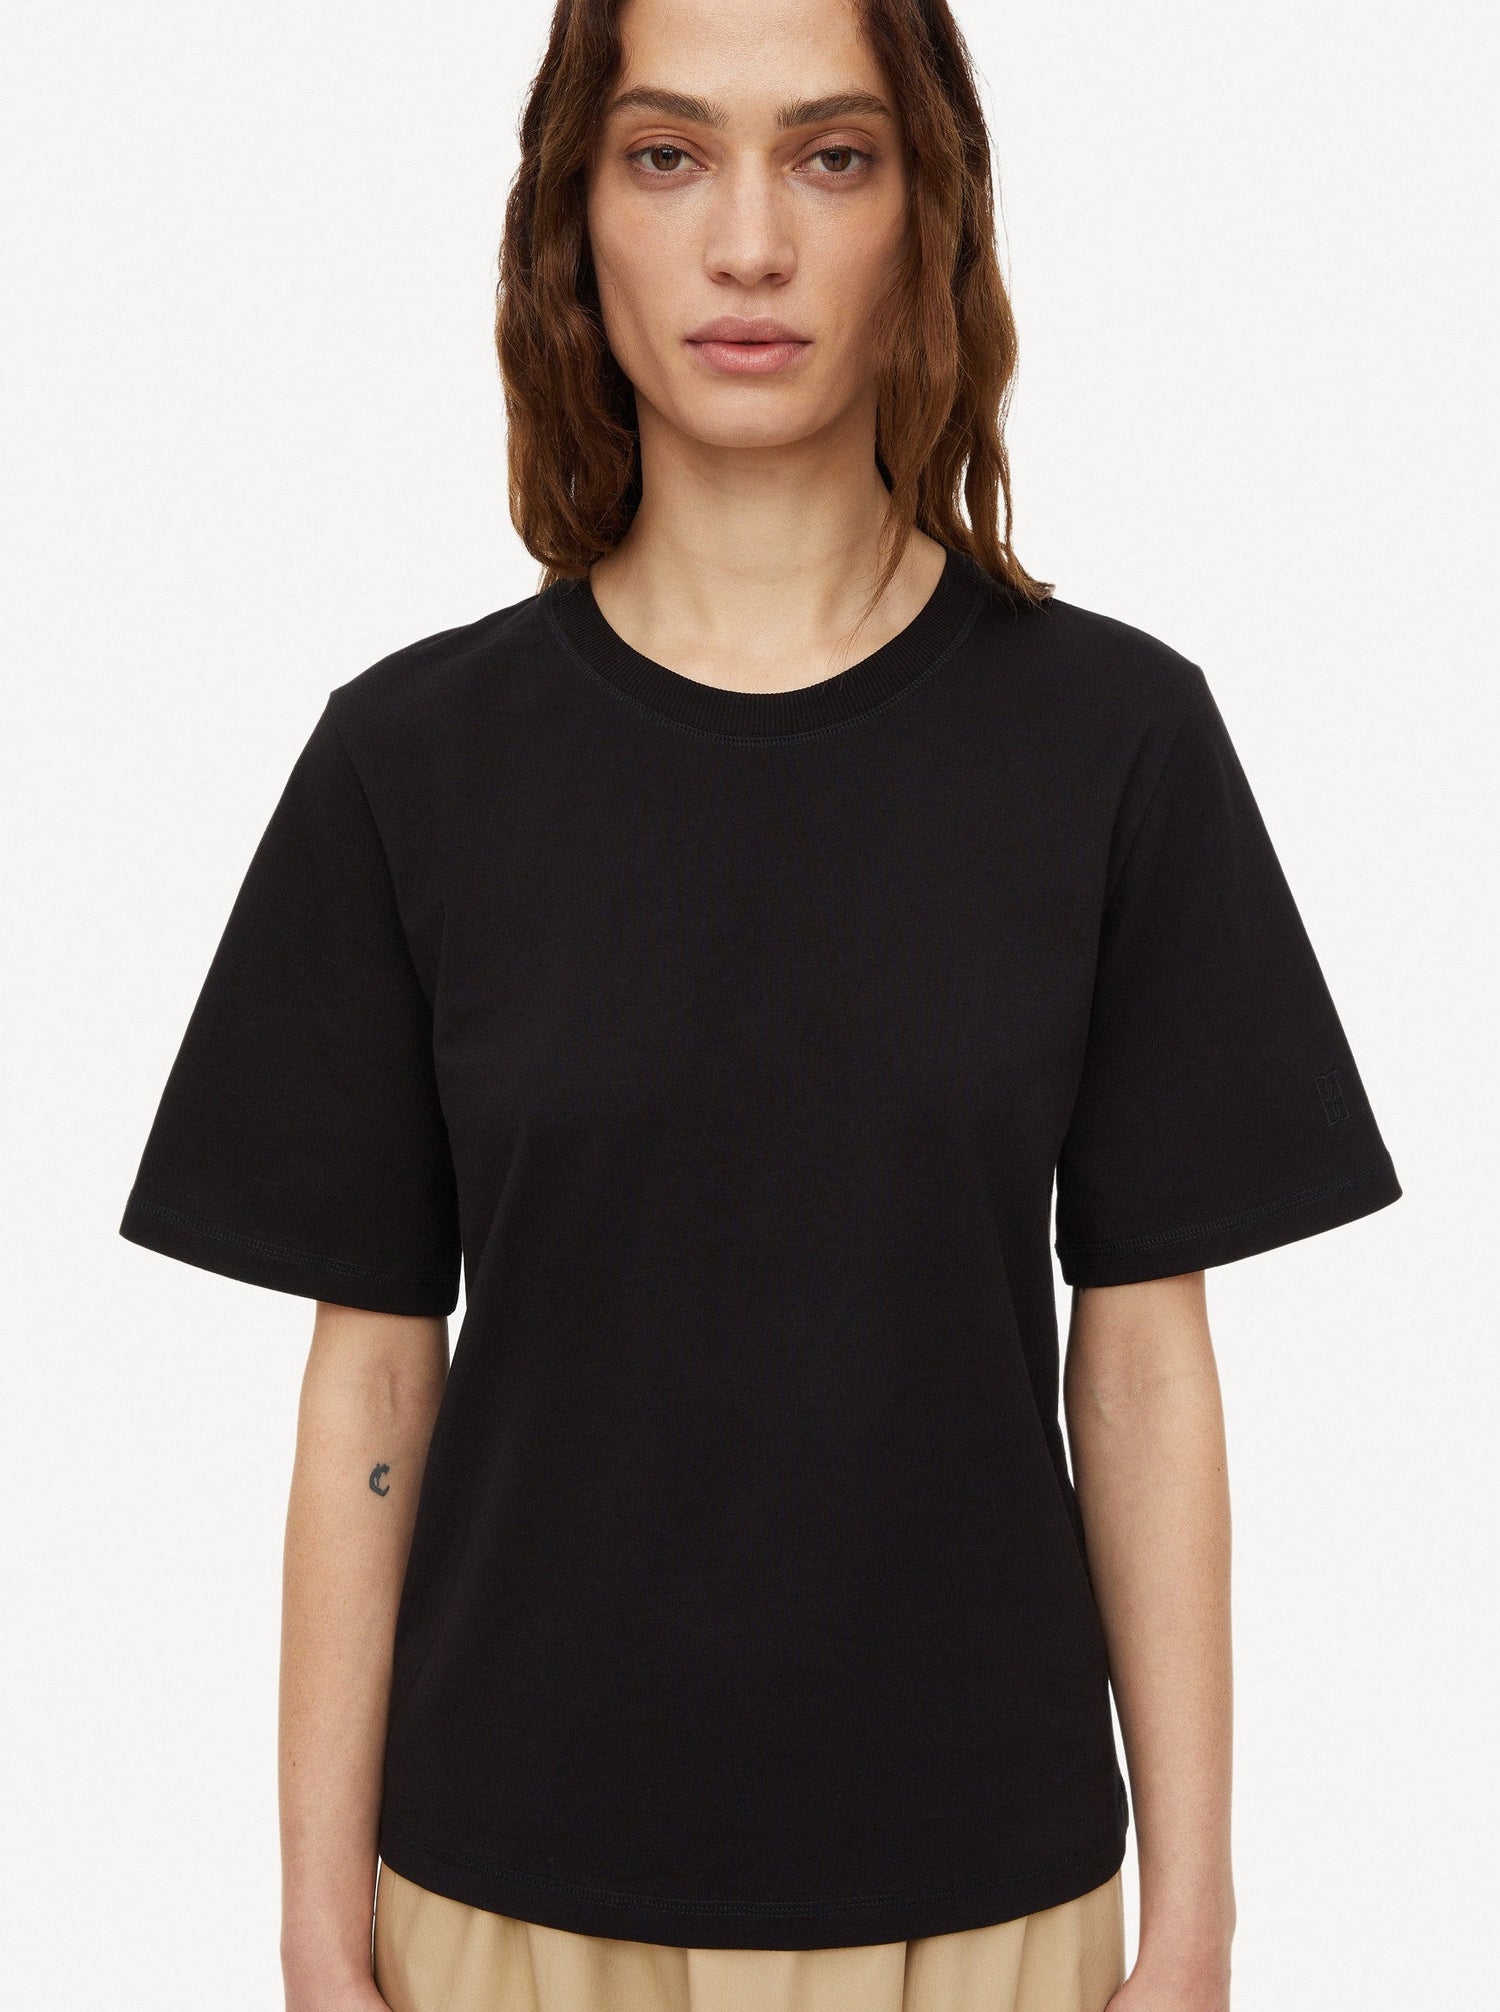 Hedil T-shirt, black